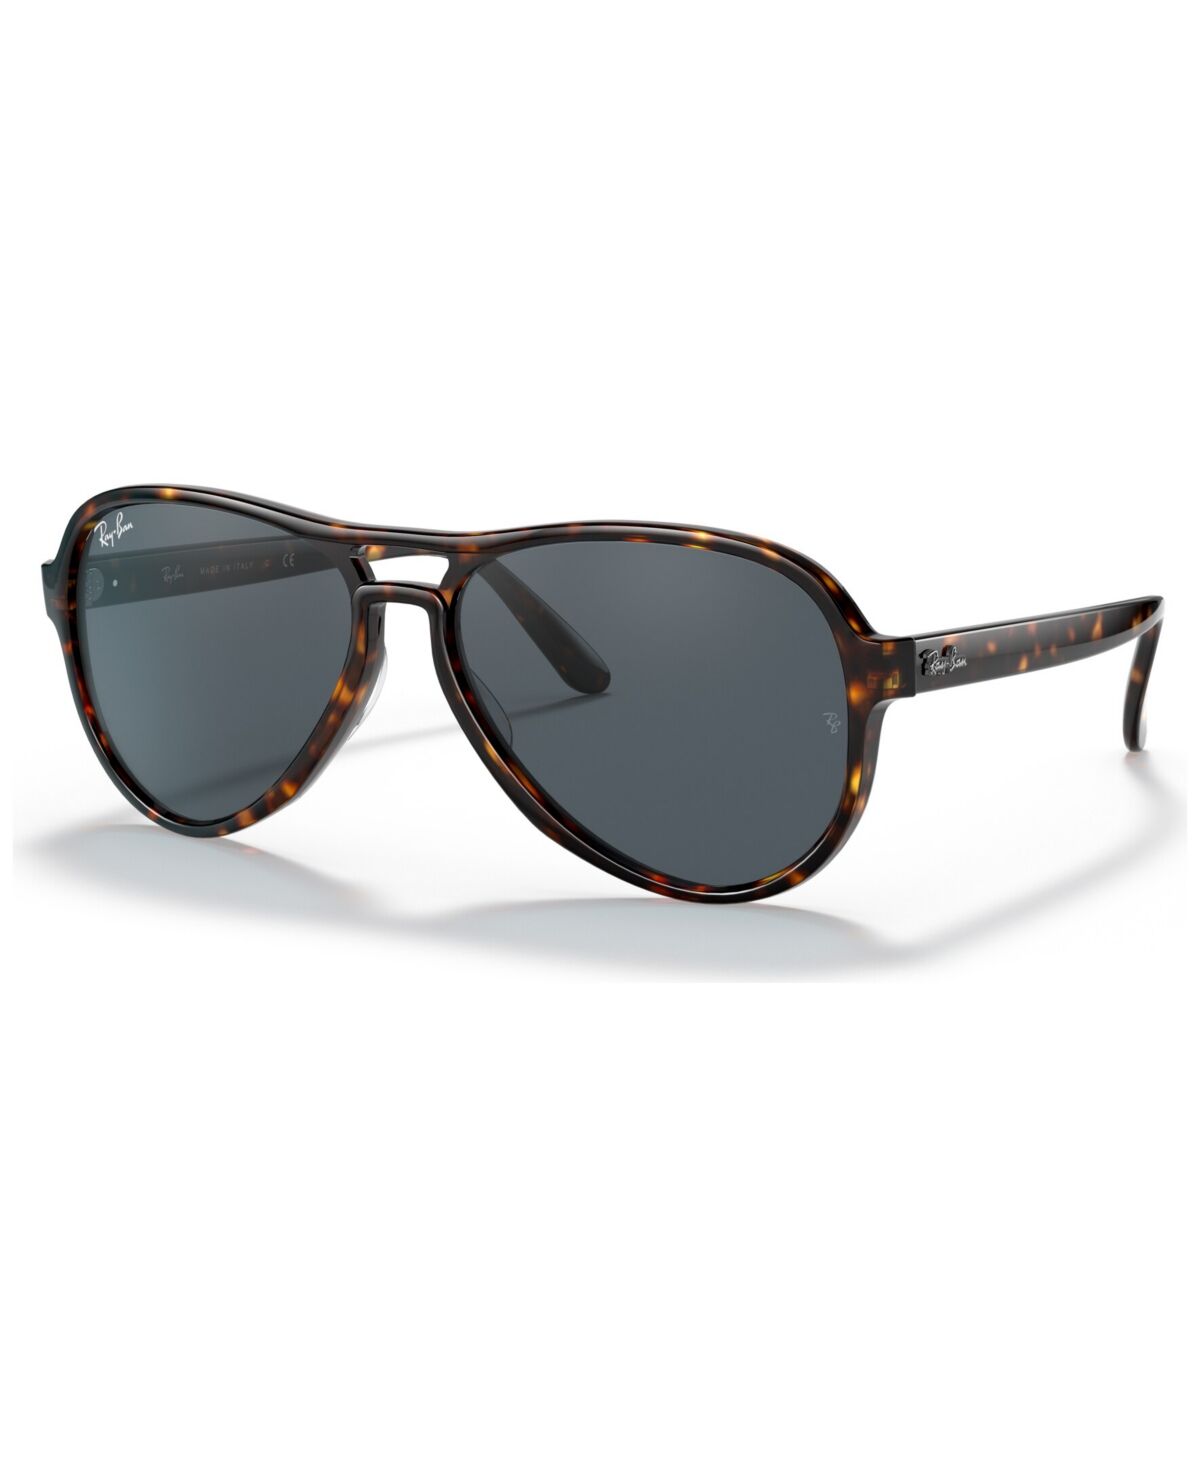 Ray-Ban Unisex Vagabond Sunglasses, RB4355 - Havana